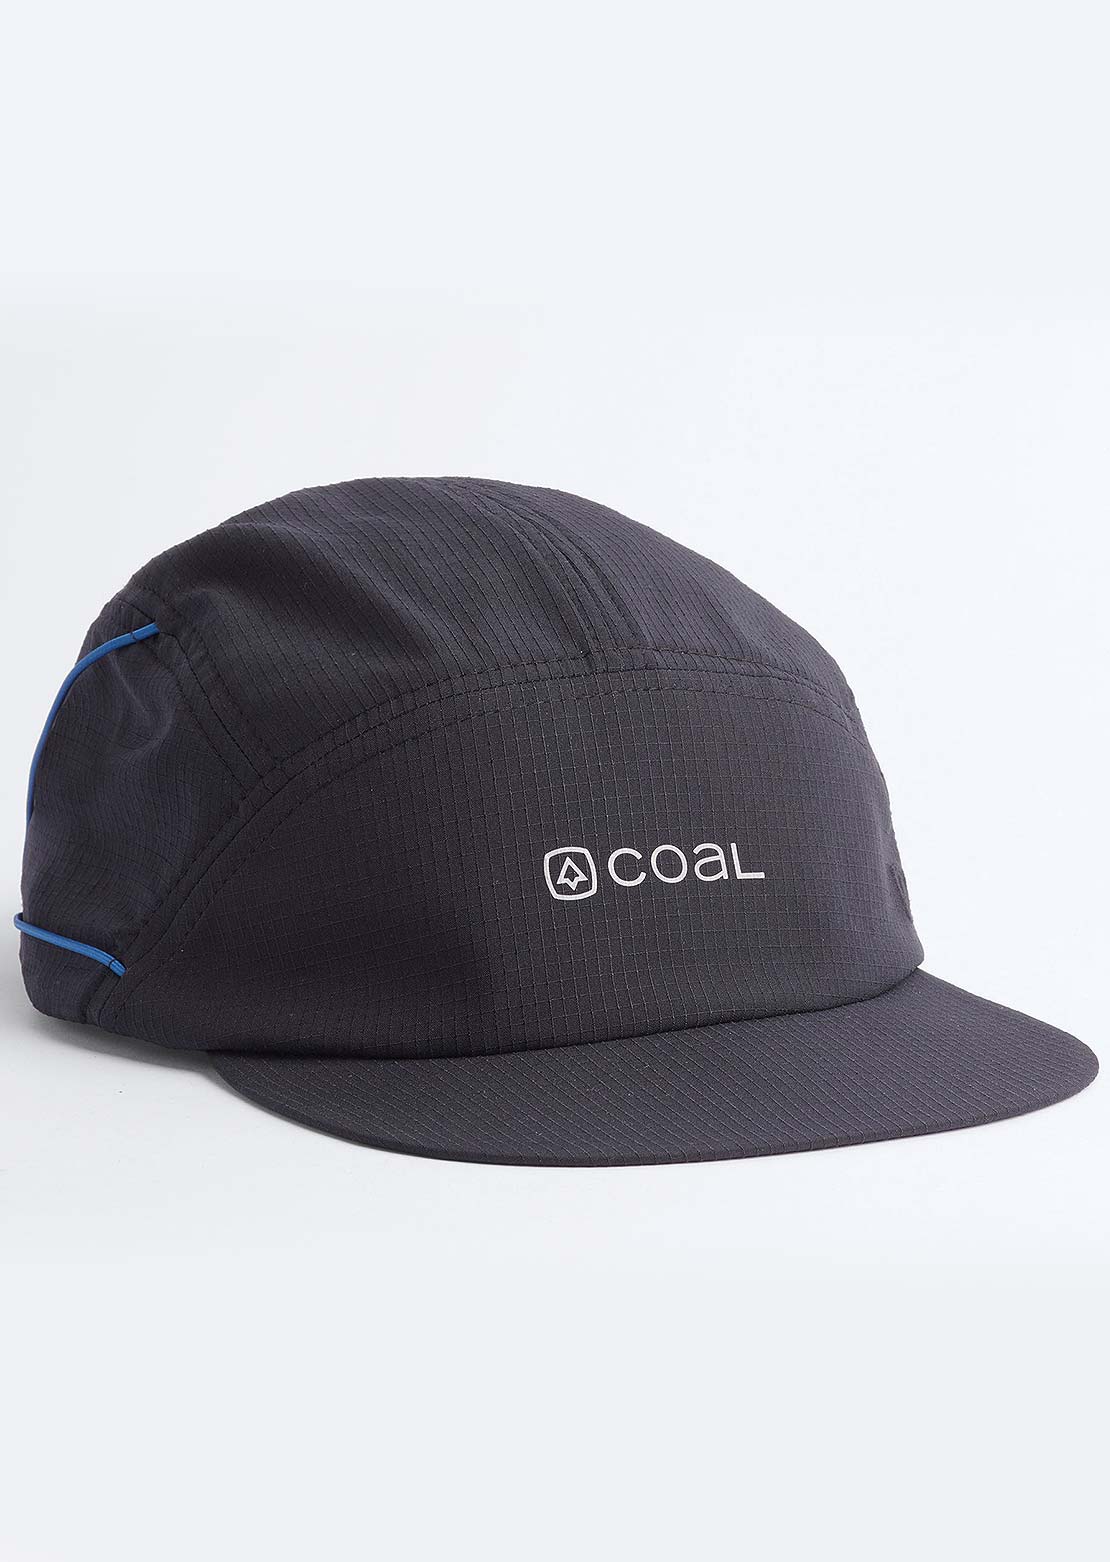 Coal Framework Cap Black